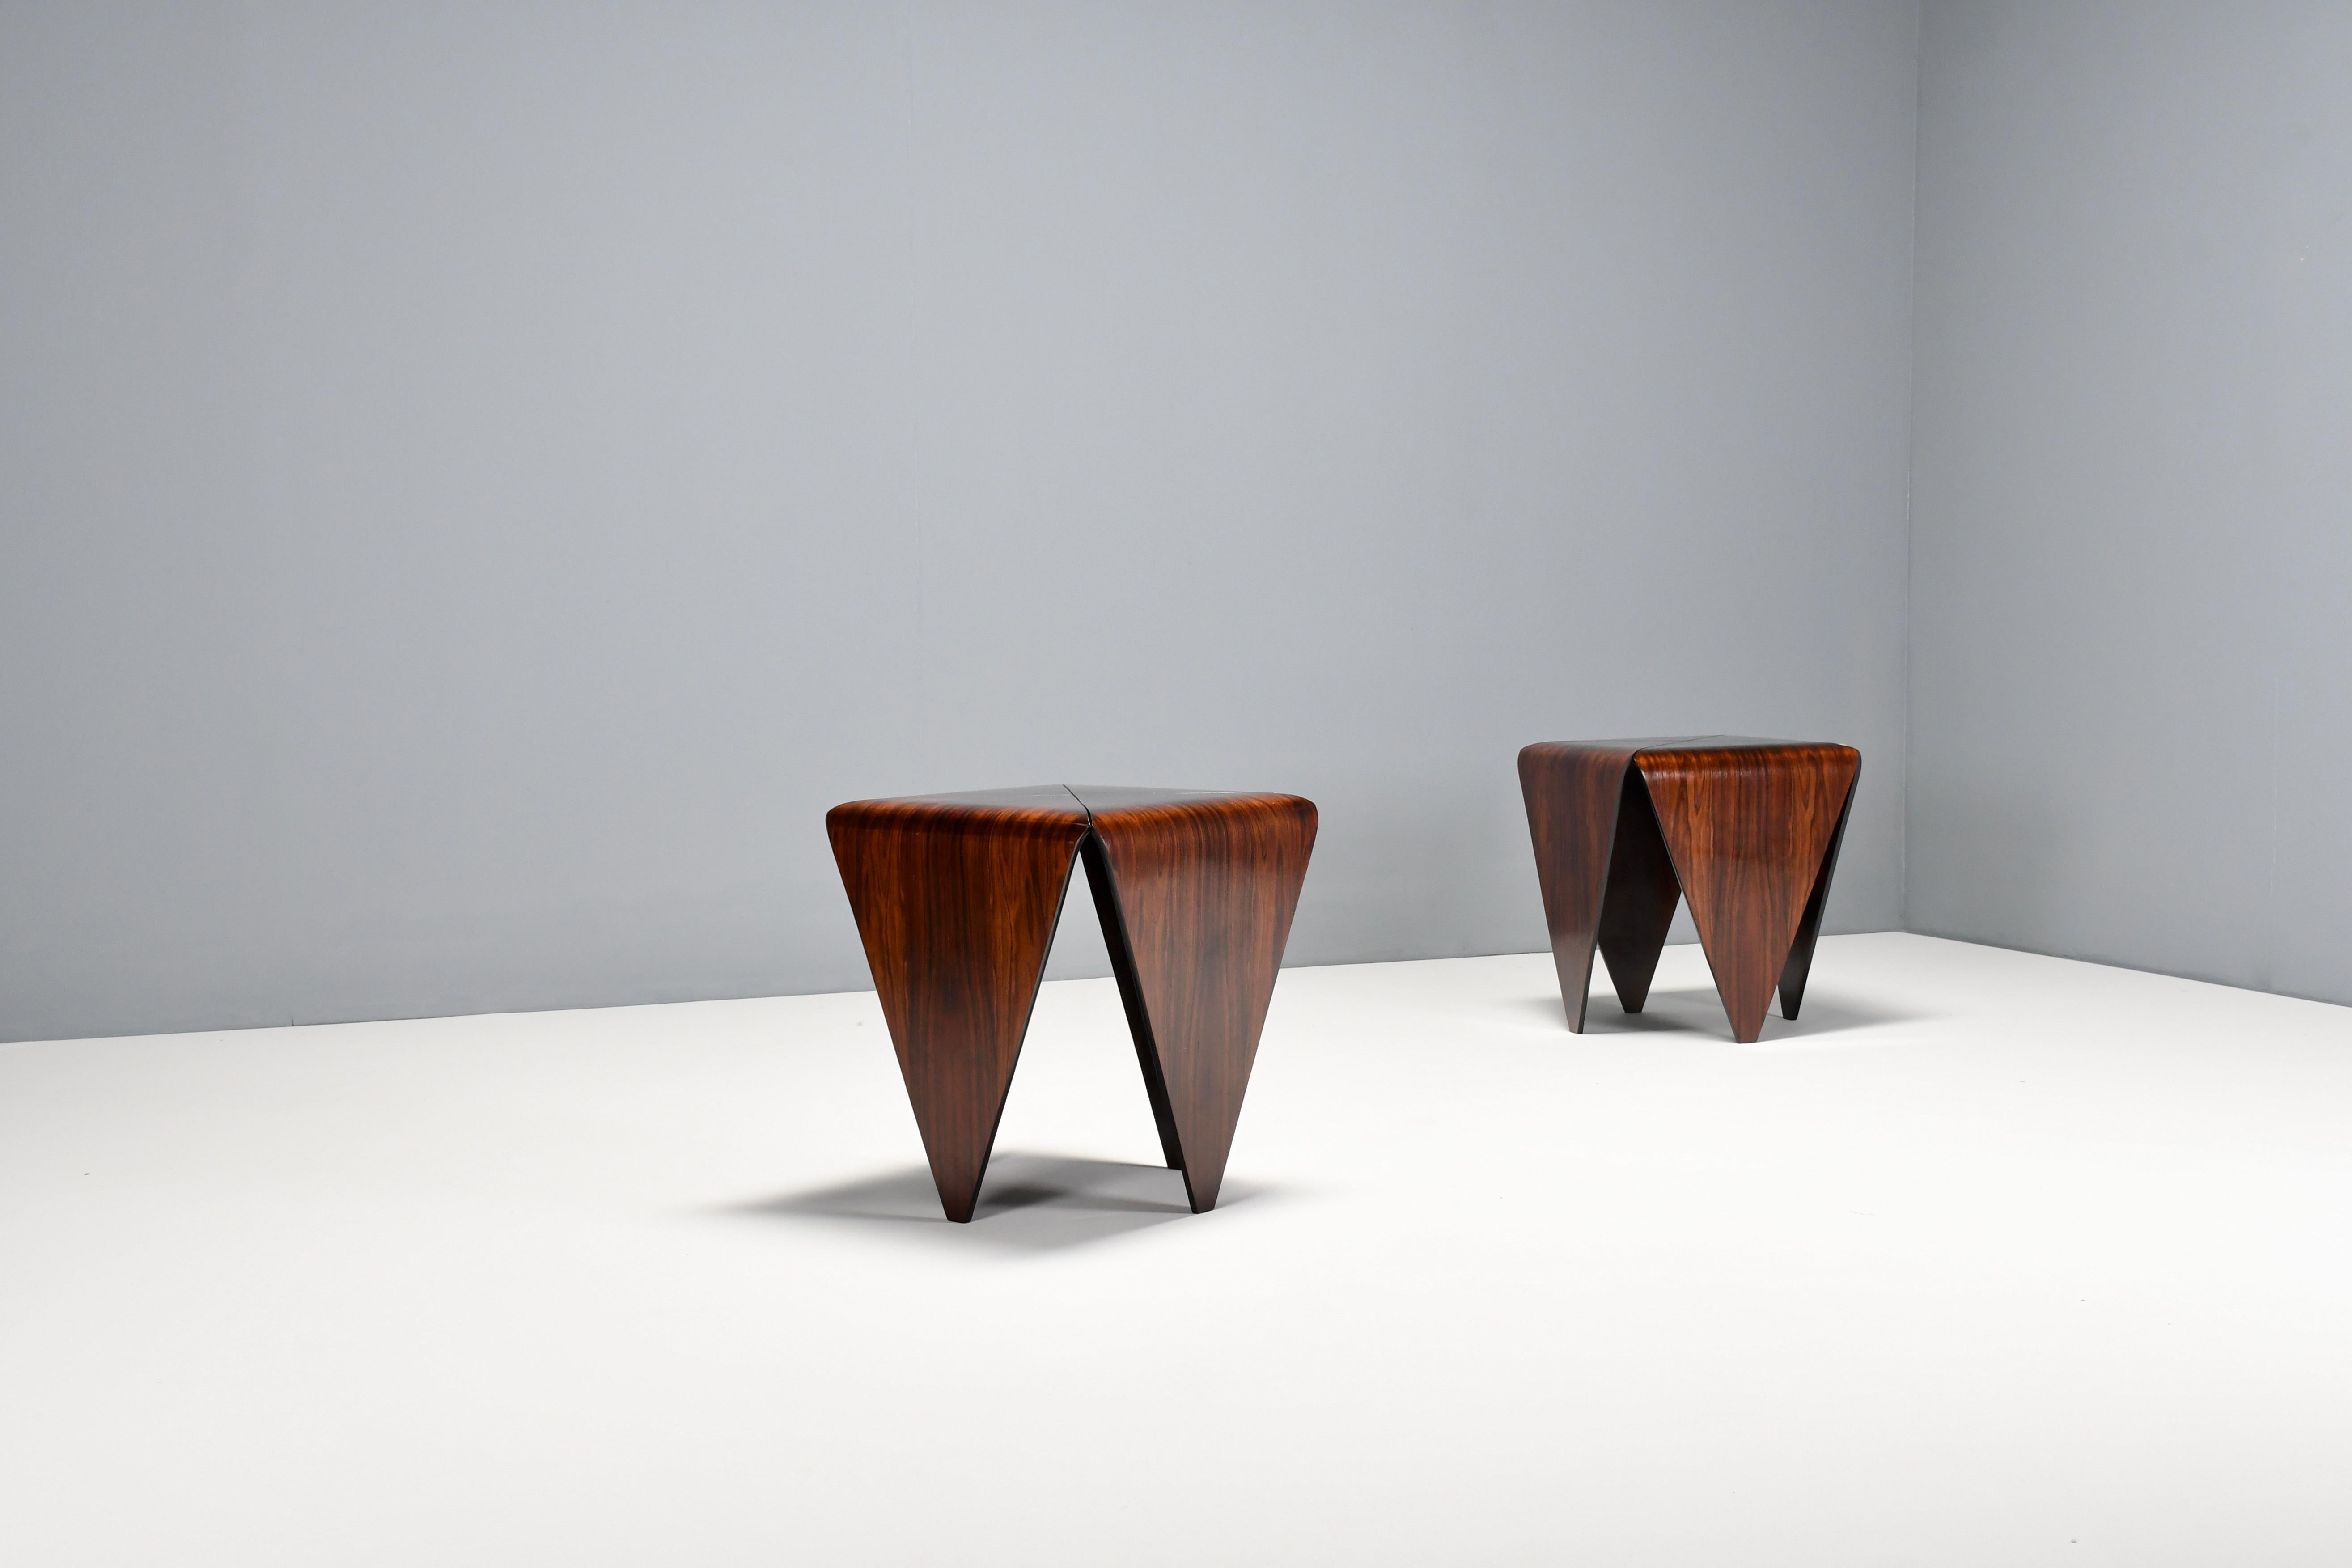 Jacaranda Set of Two Jorge Zalszupin Petalas Tables by L’atelier, Brazil, 1959